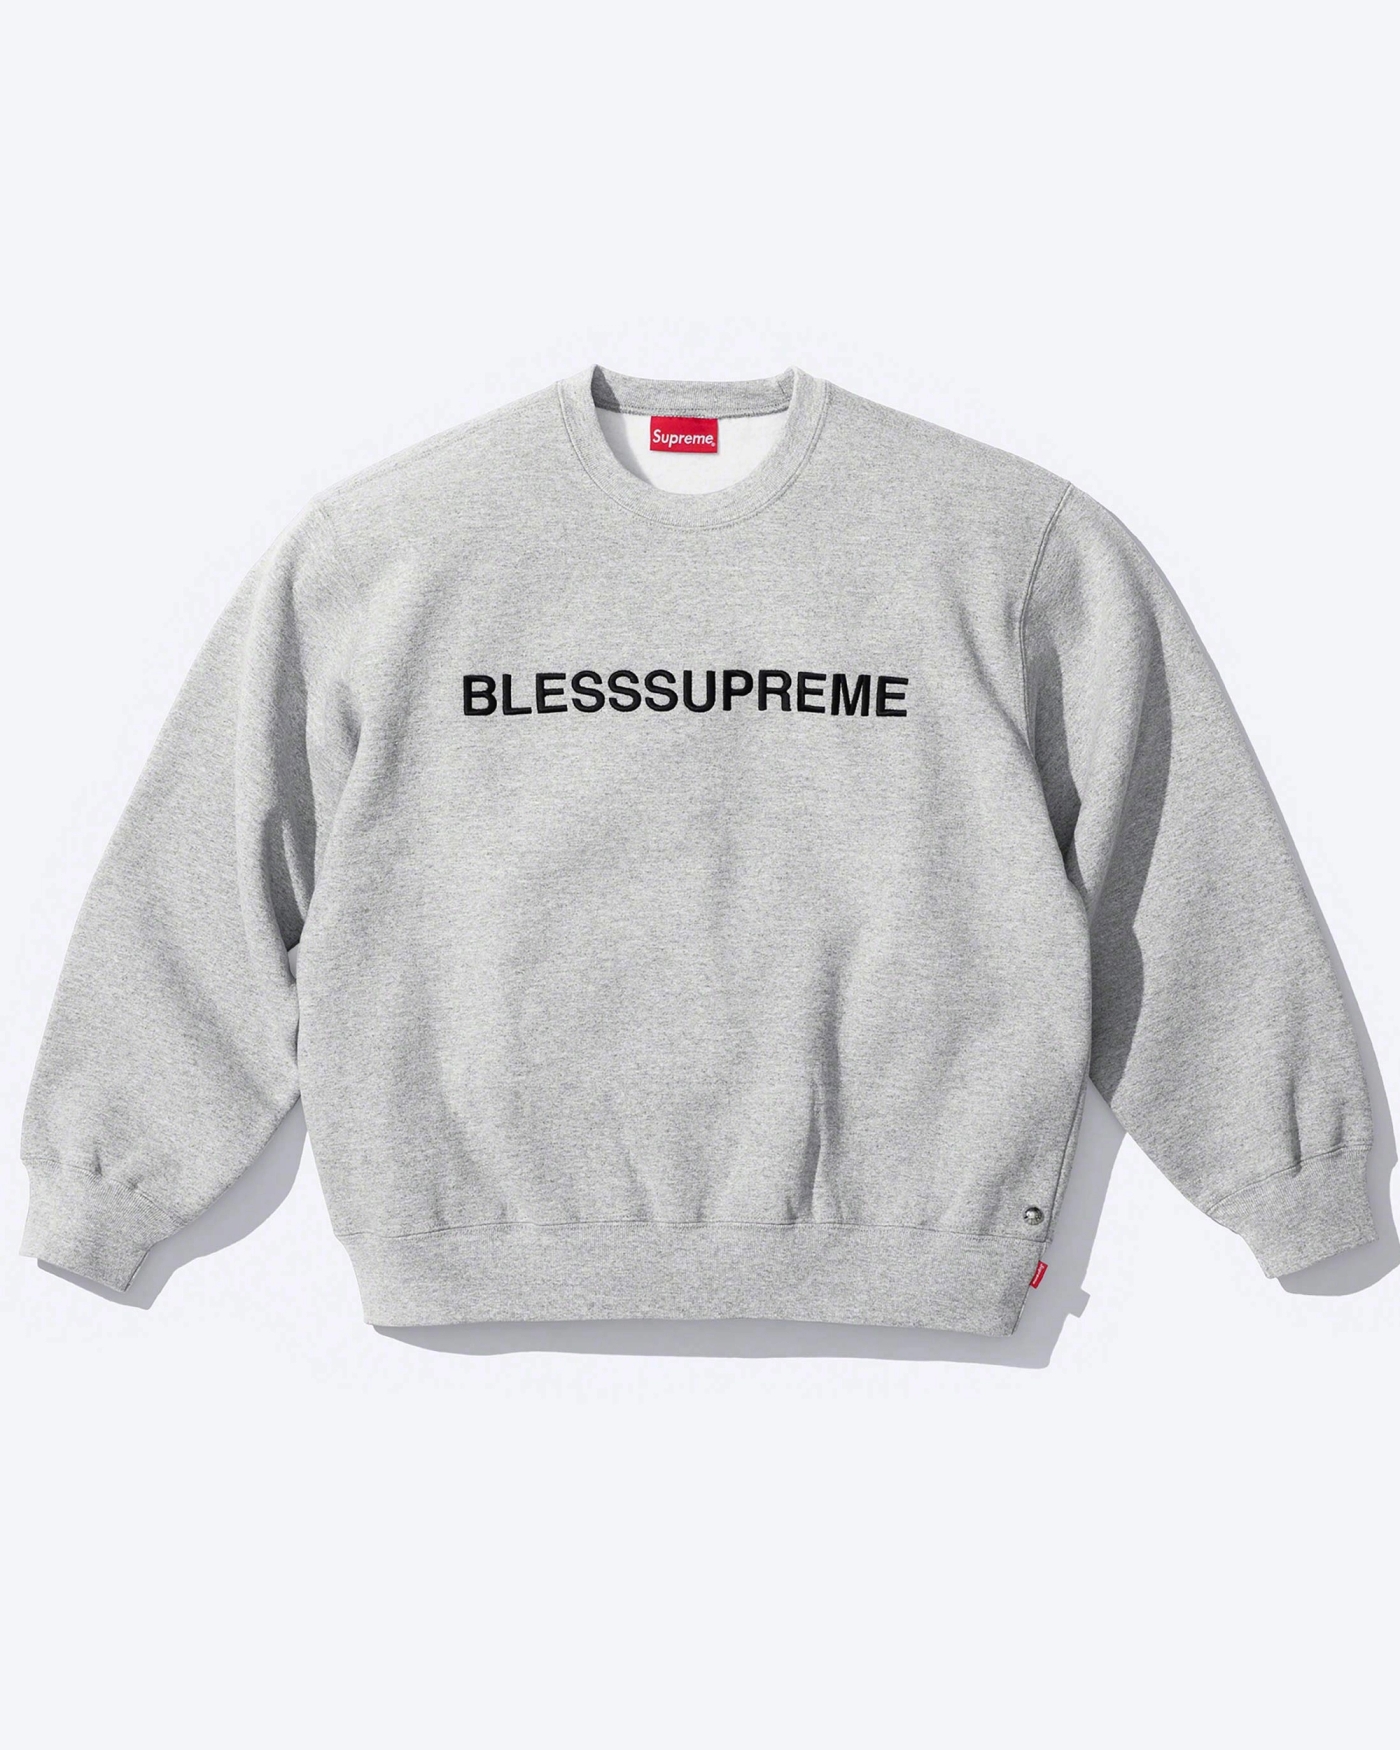 Supreme®/BLESS (23/28)